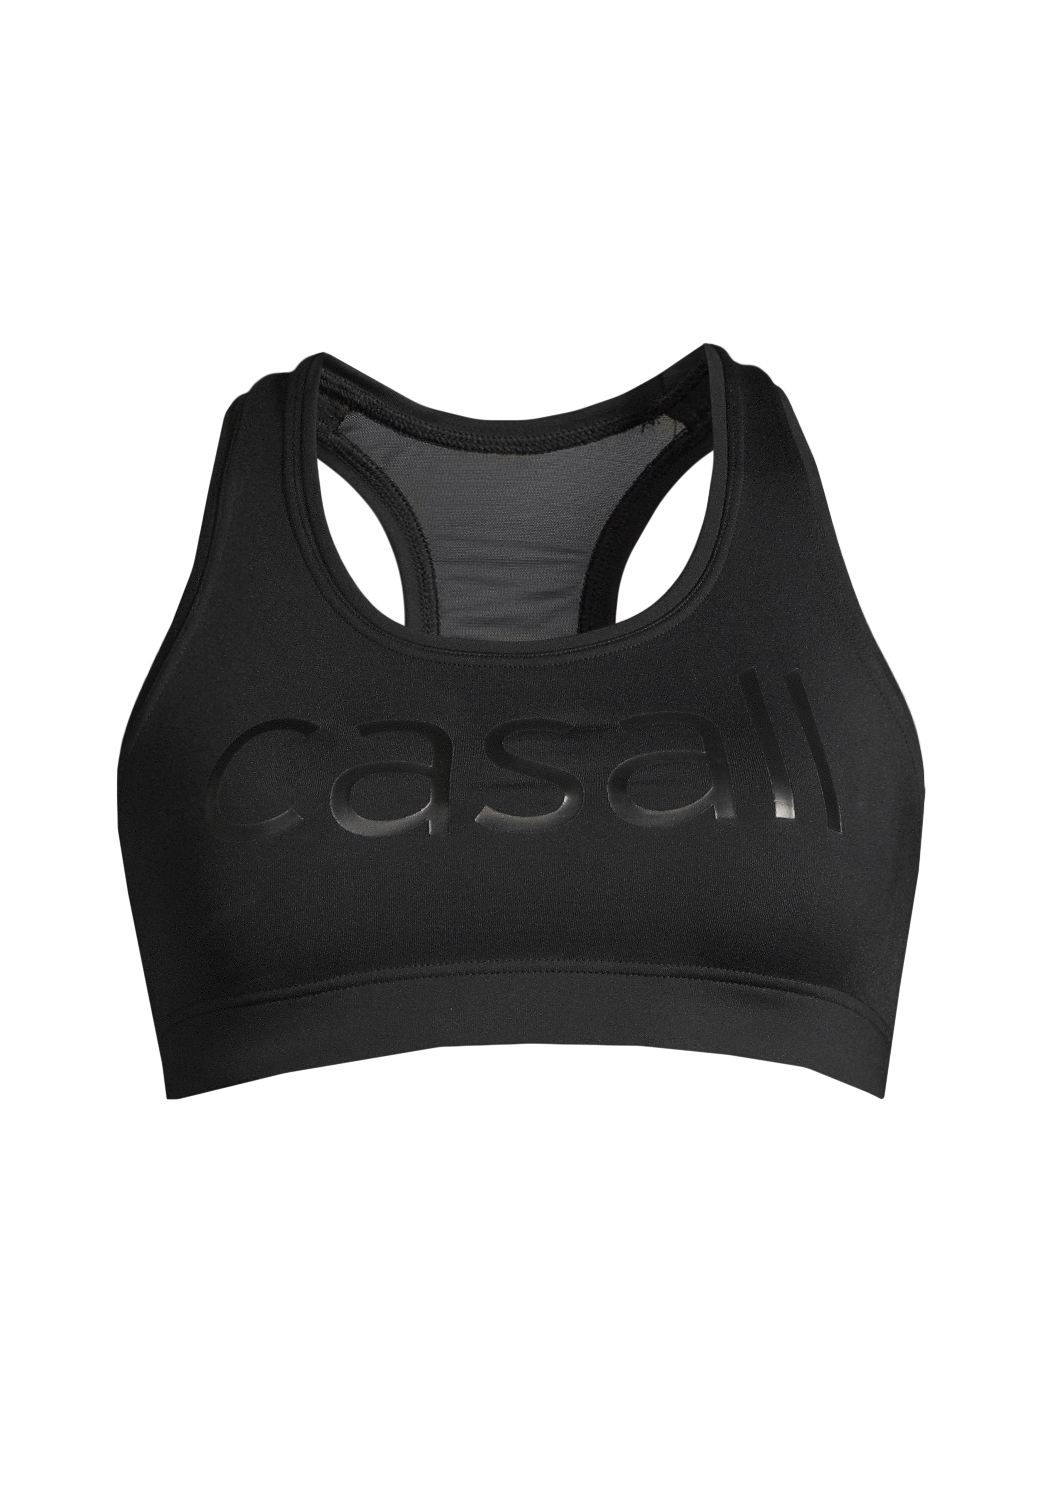 Casall Iconic Wool Sports Bra - Sports bras